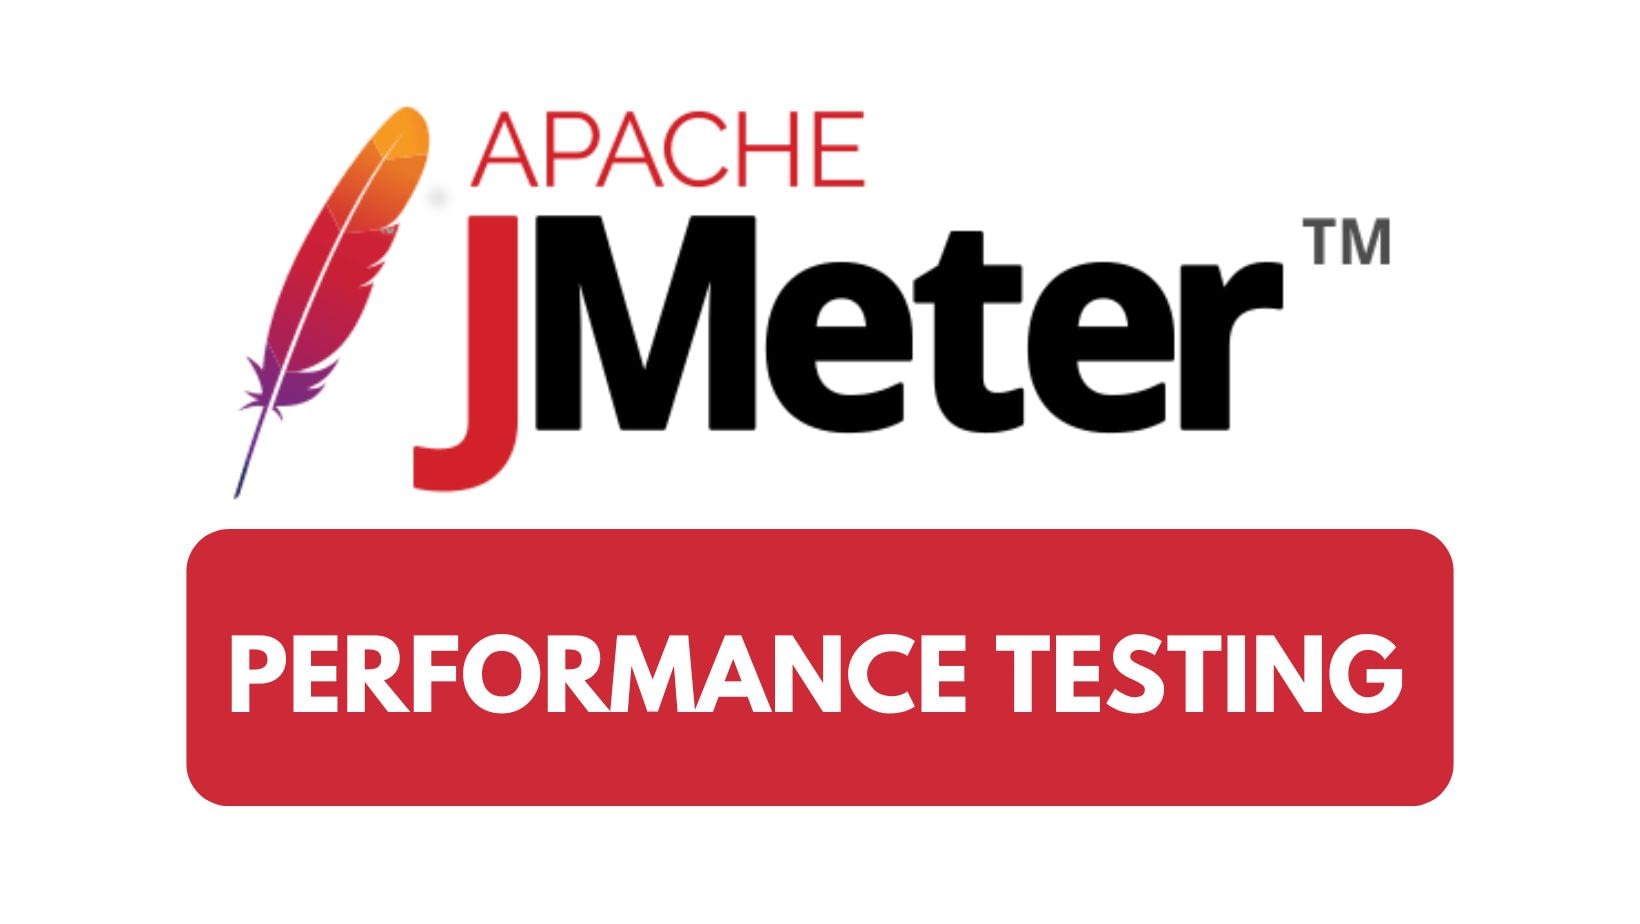 Jmeter Performance Testing